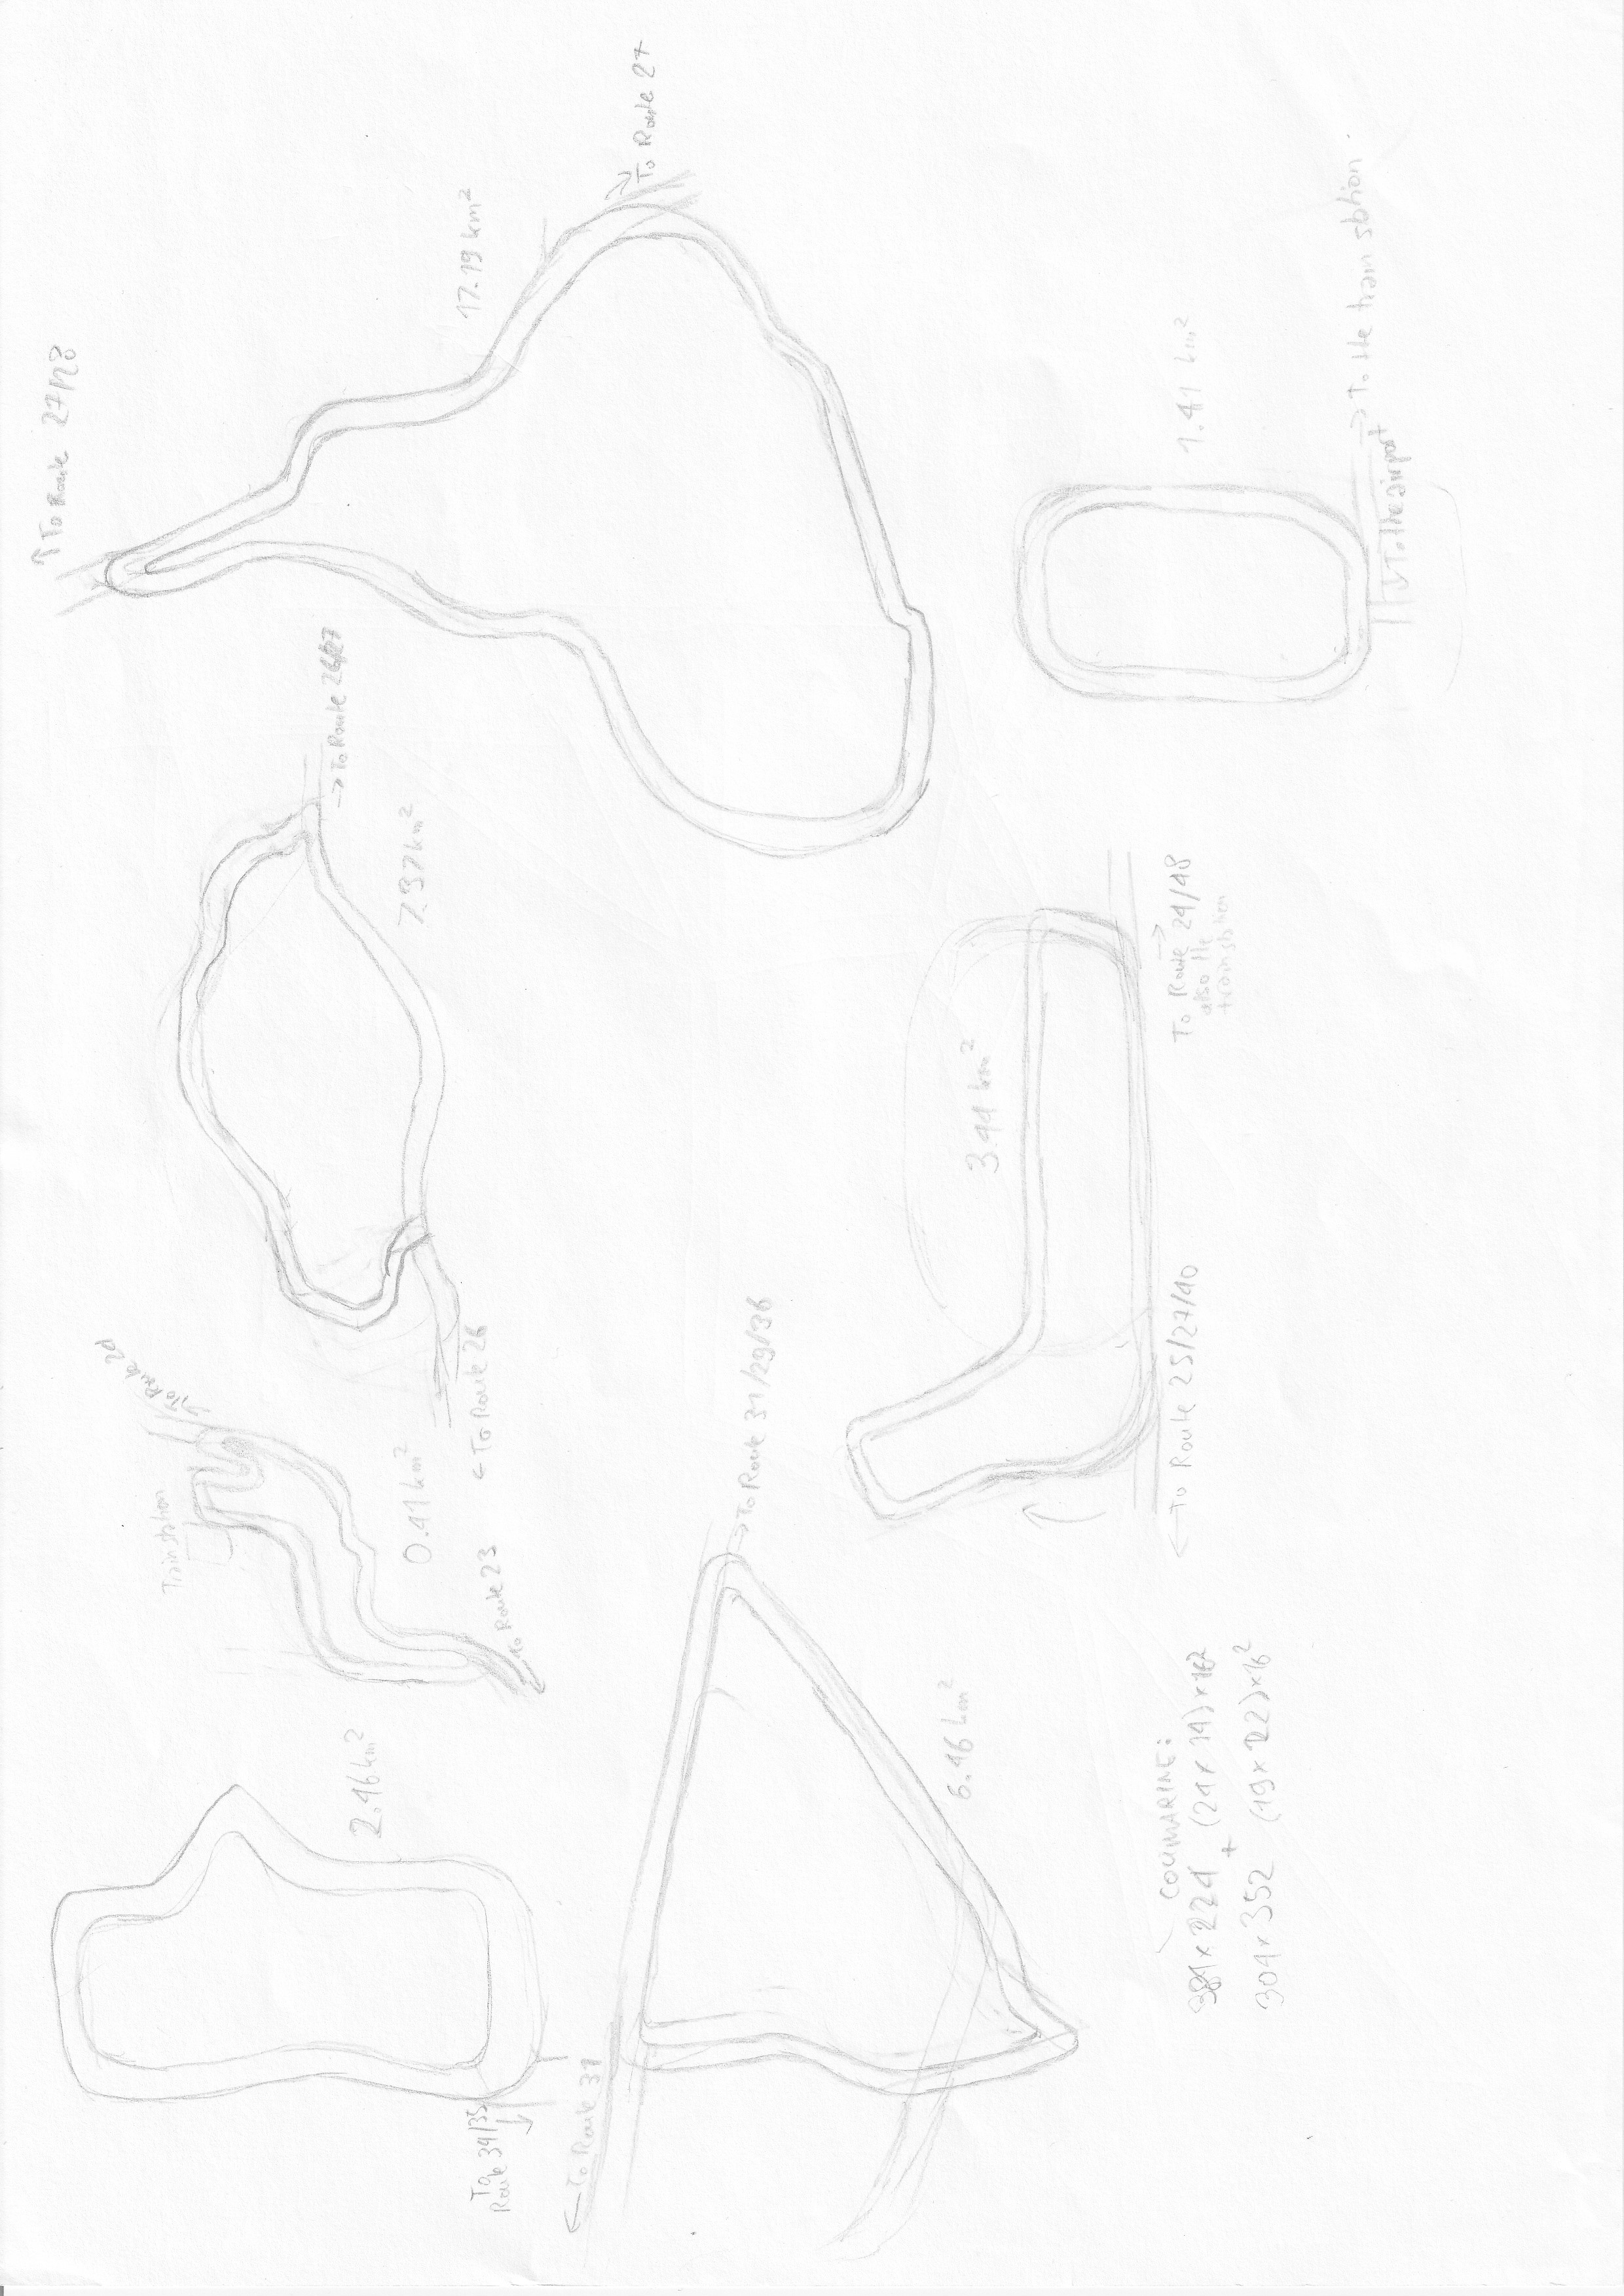 F1 game circuit maps